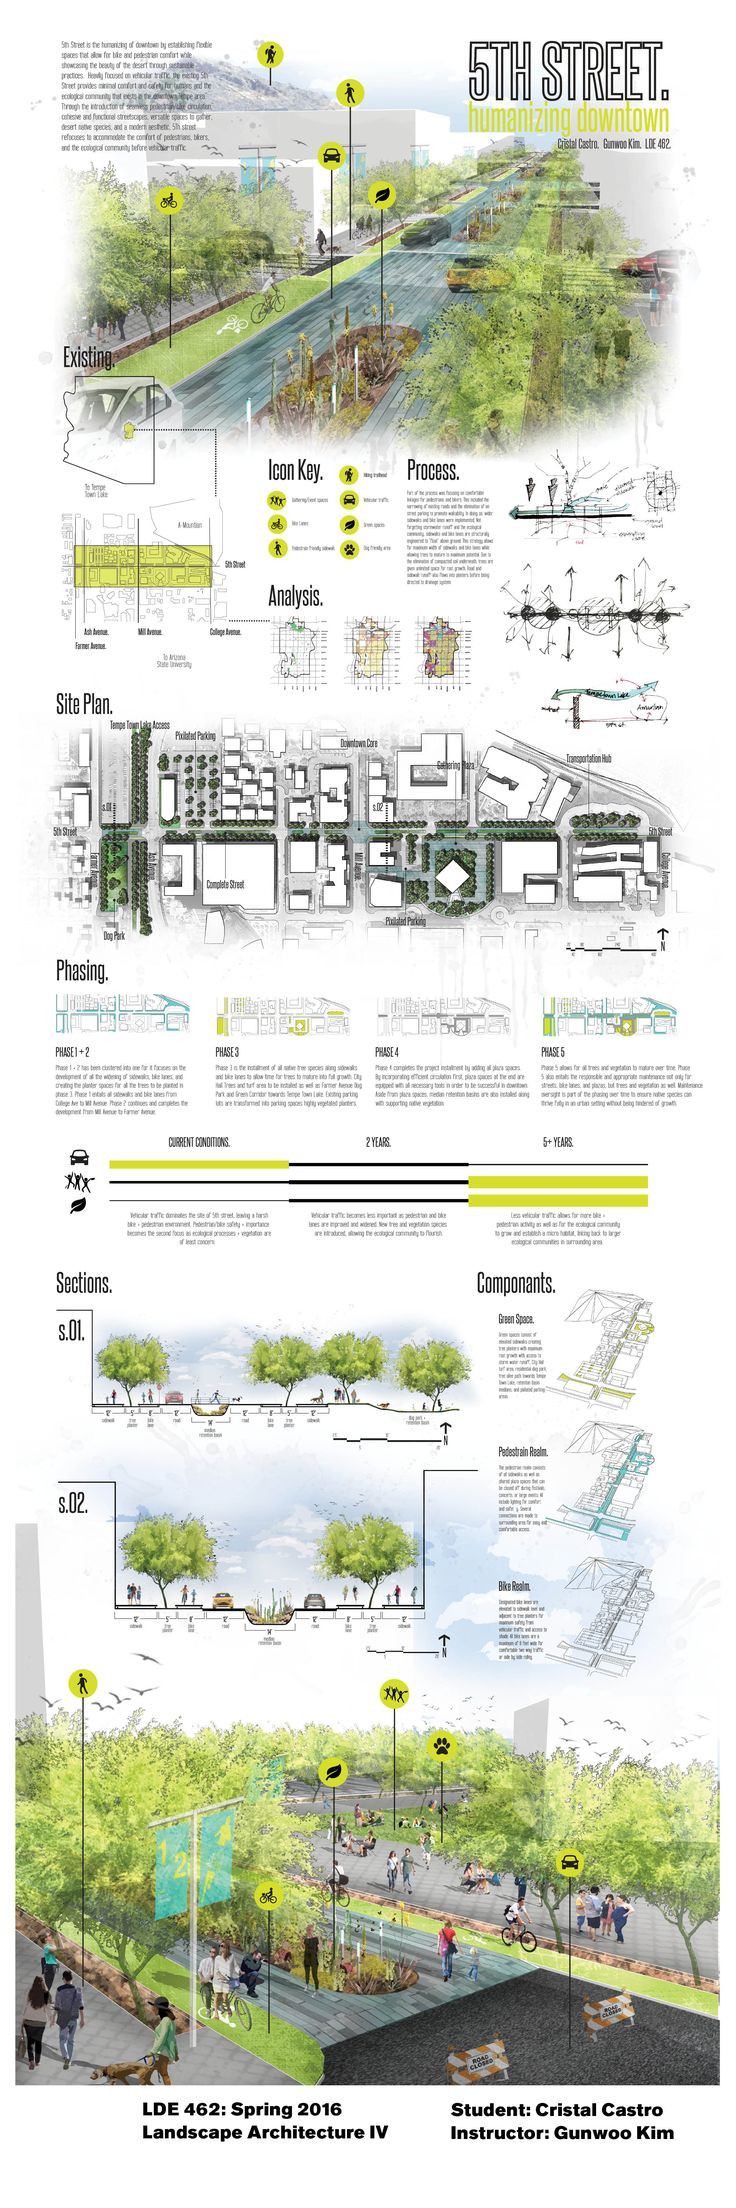 Best ideas about Landscape Architecture Degree
. Save or Pin Best 25 Landscape architecture degree ideas on Pinterest Now.